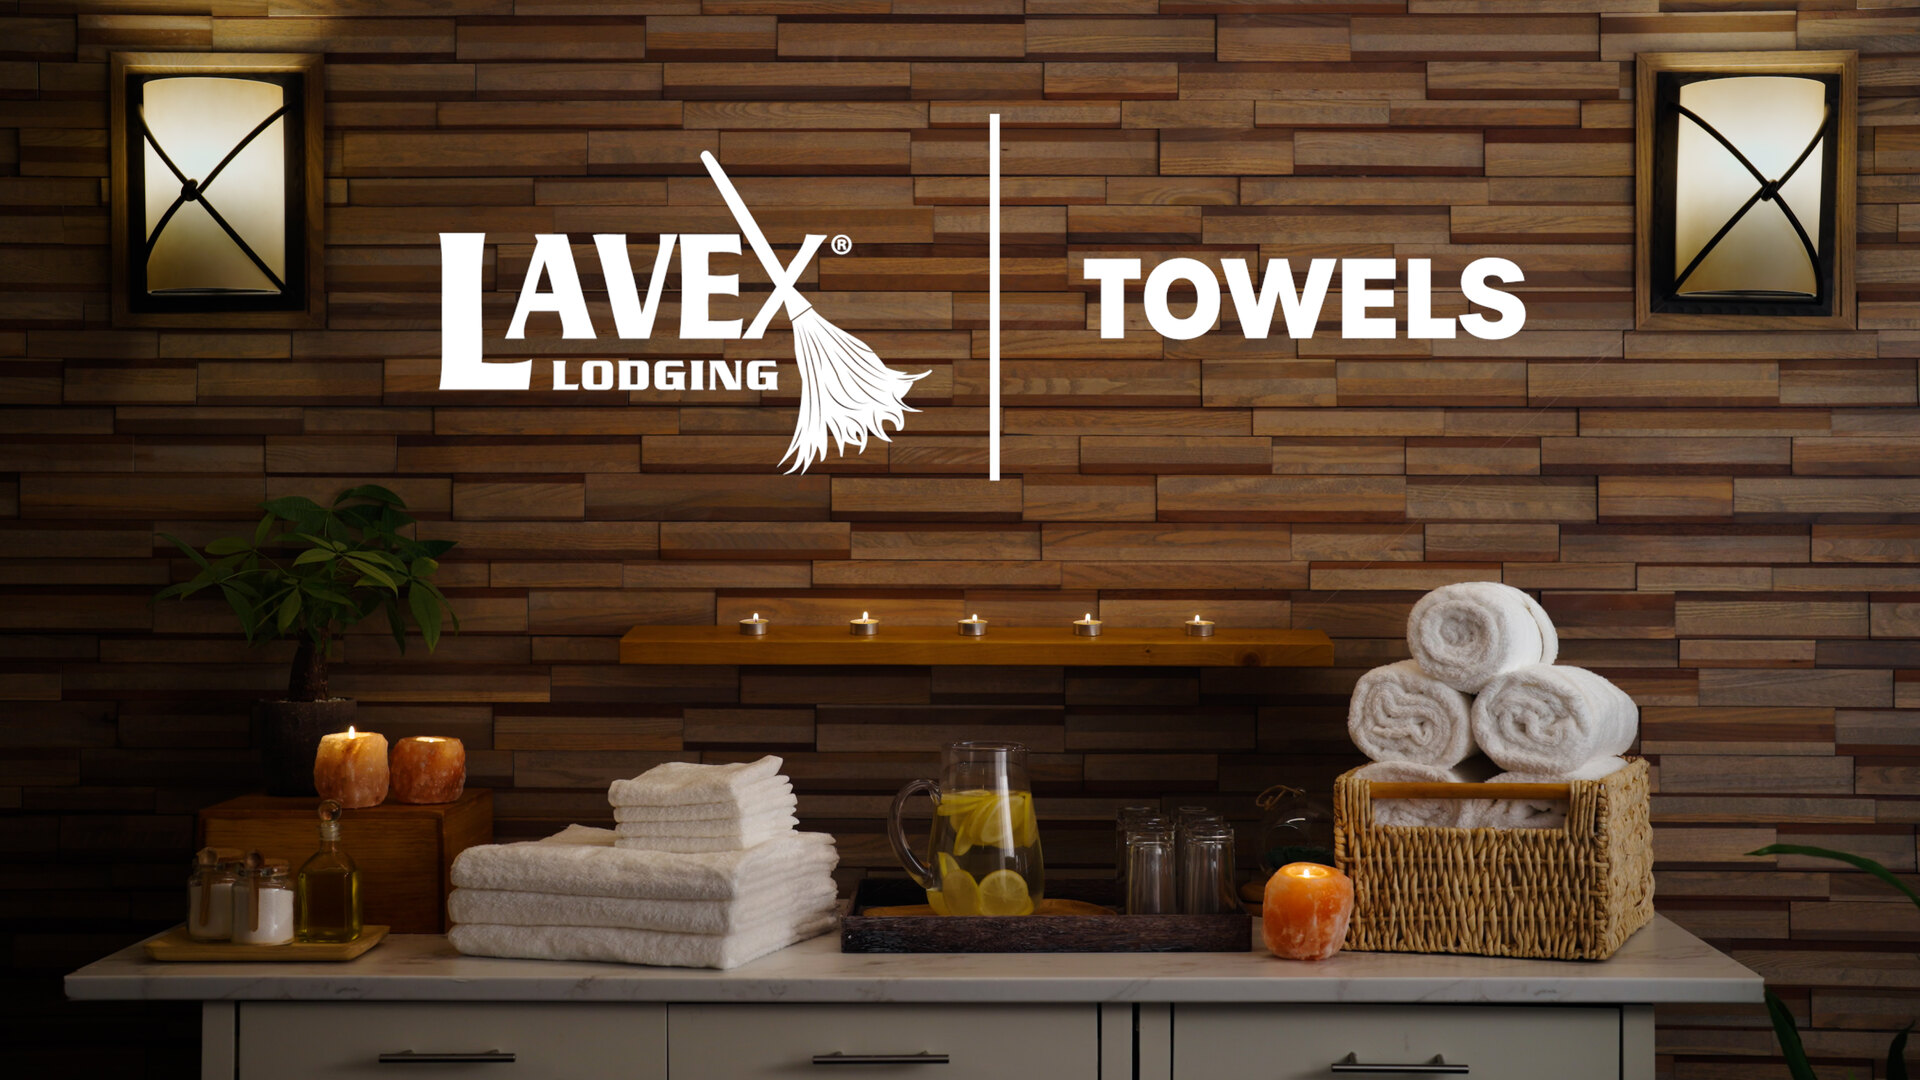 https://cdn.webstaurantstore.com/images/videos/extra_large/lavex_lodging_towels_thumb.jpg